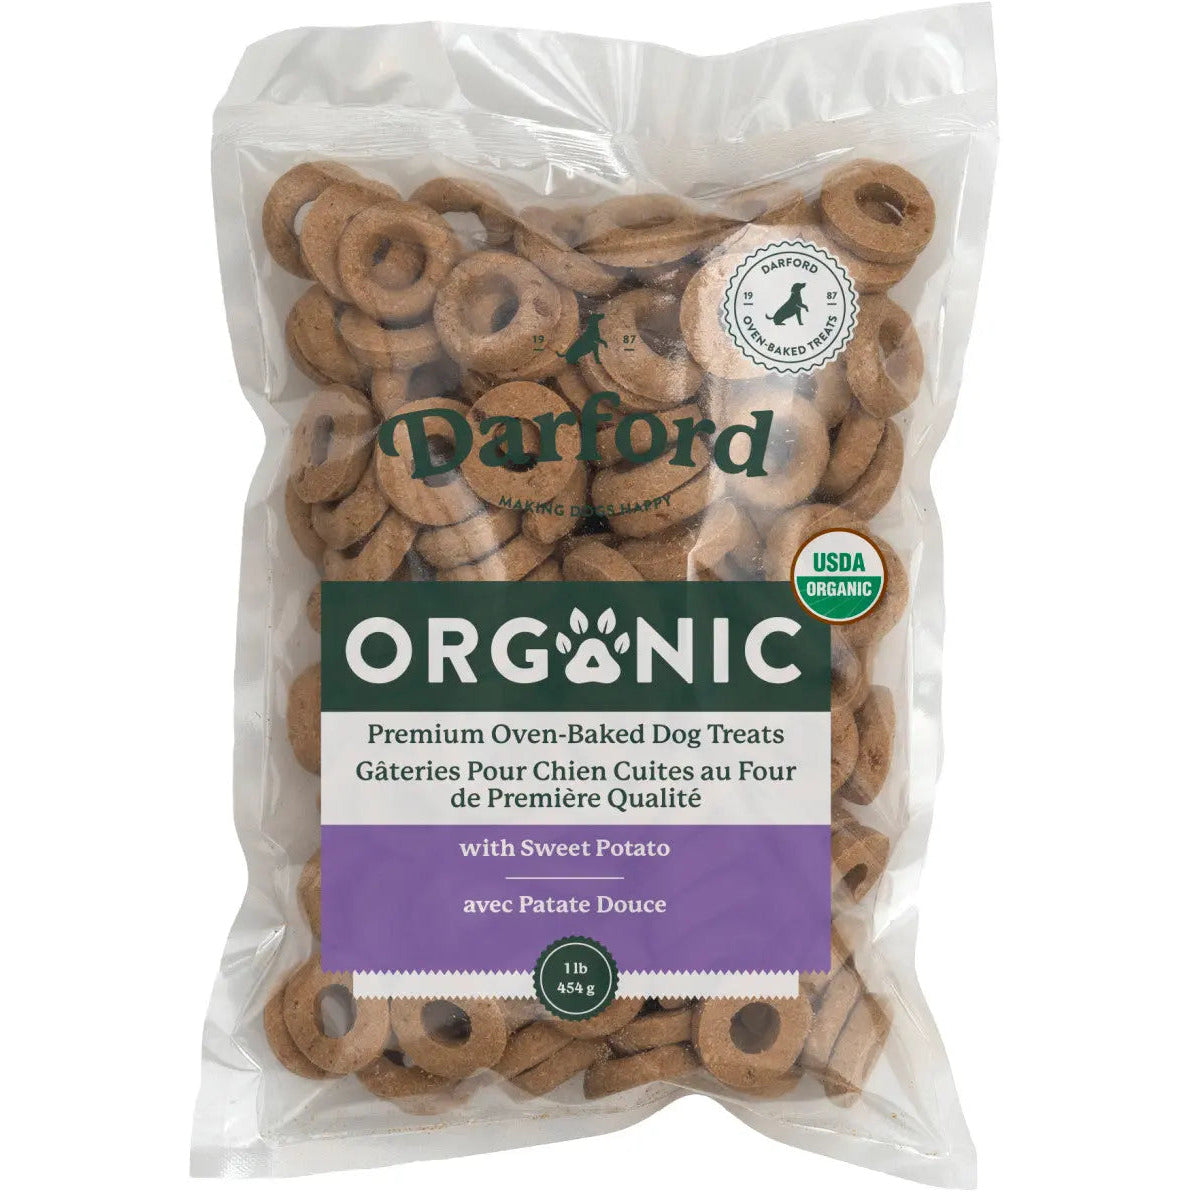 Darford Organic Sweet Potato Dog Treats PrePacked Bulk 6 / 1 lb Darford